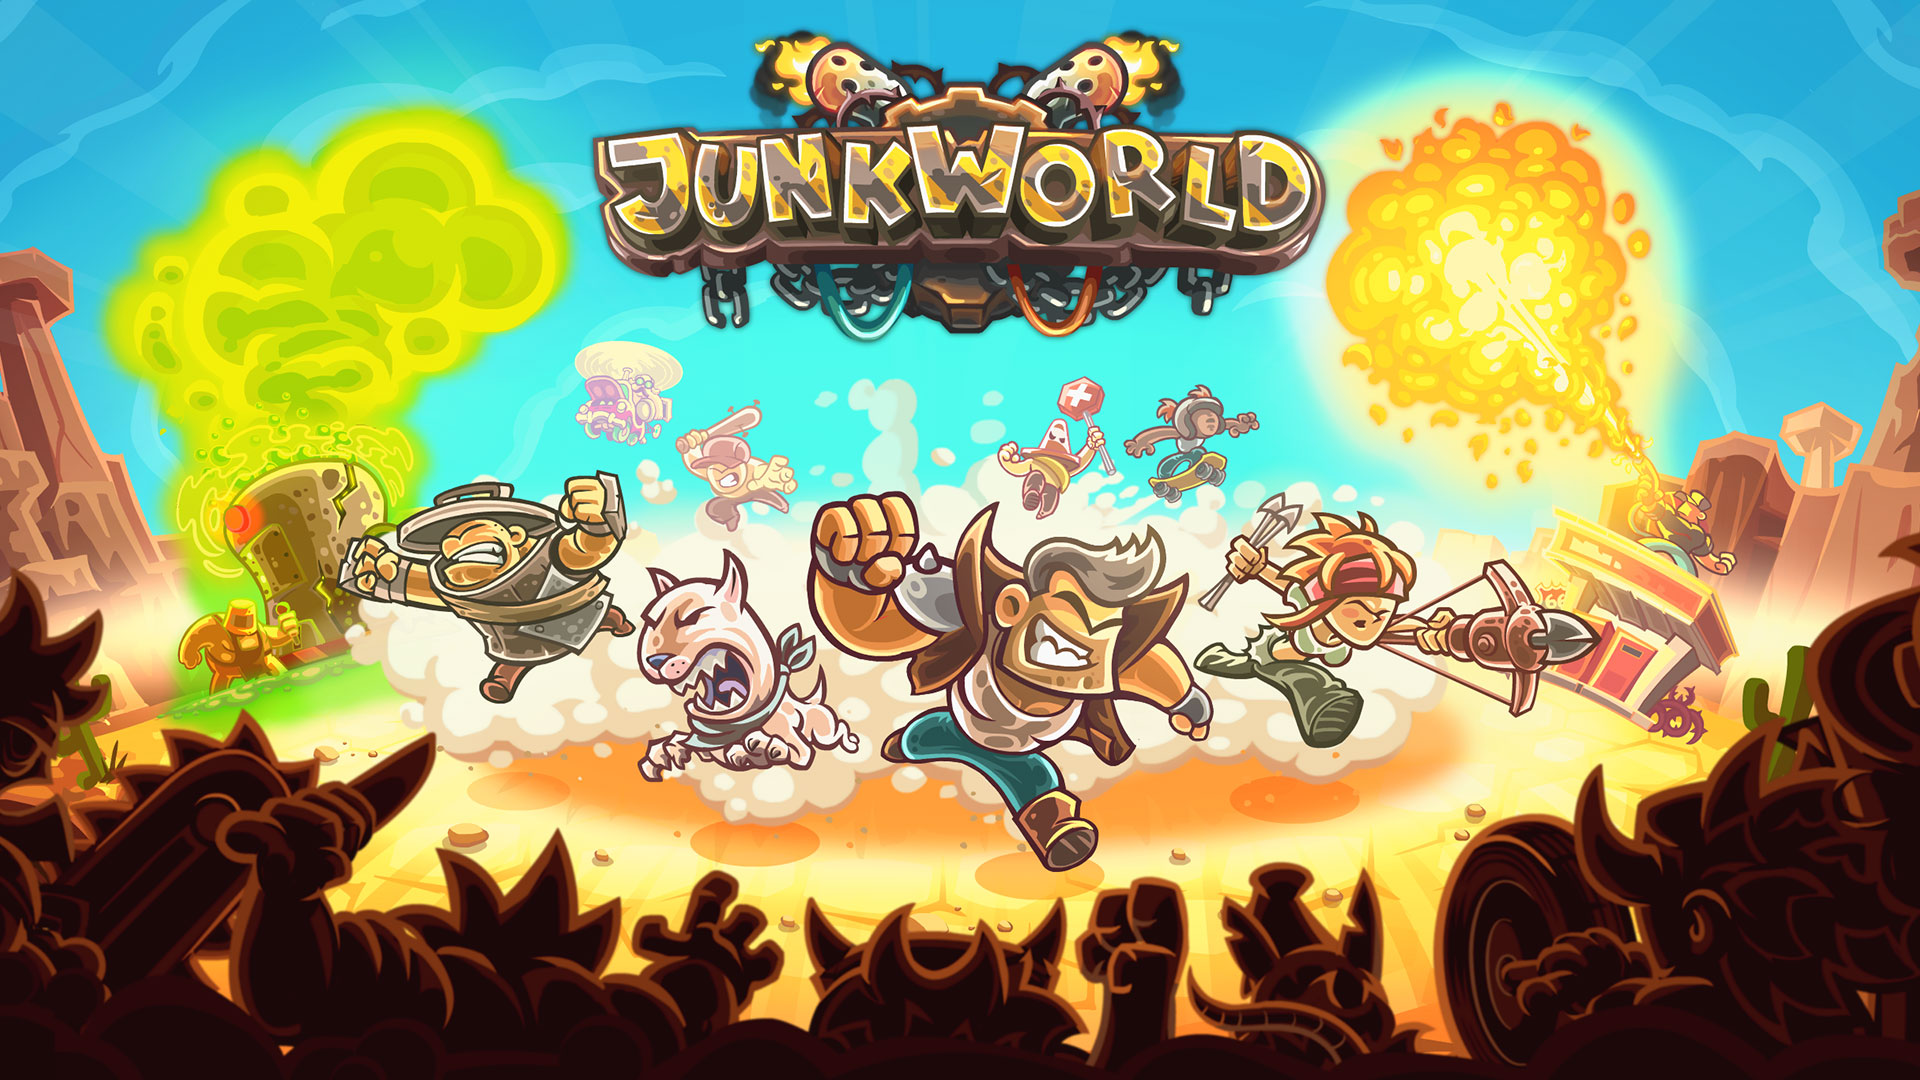 Junkworld TD download the last version for iphone